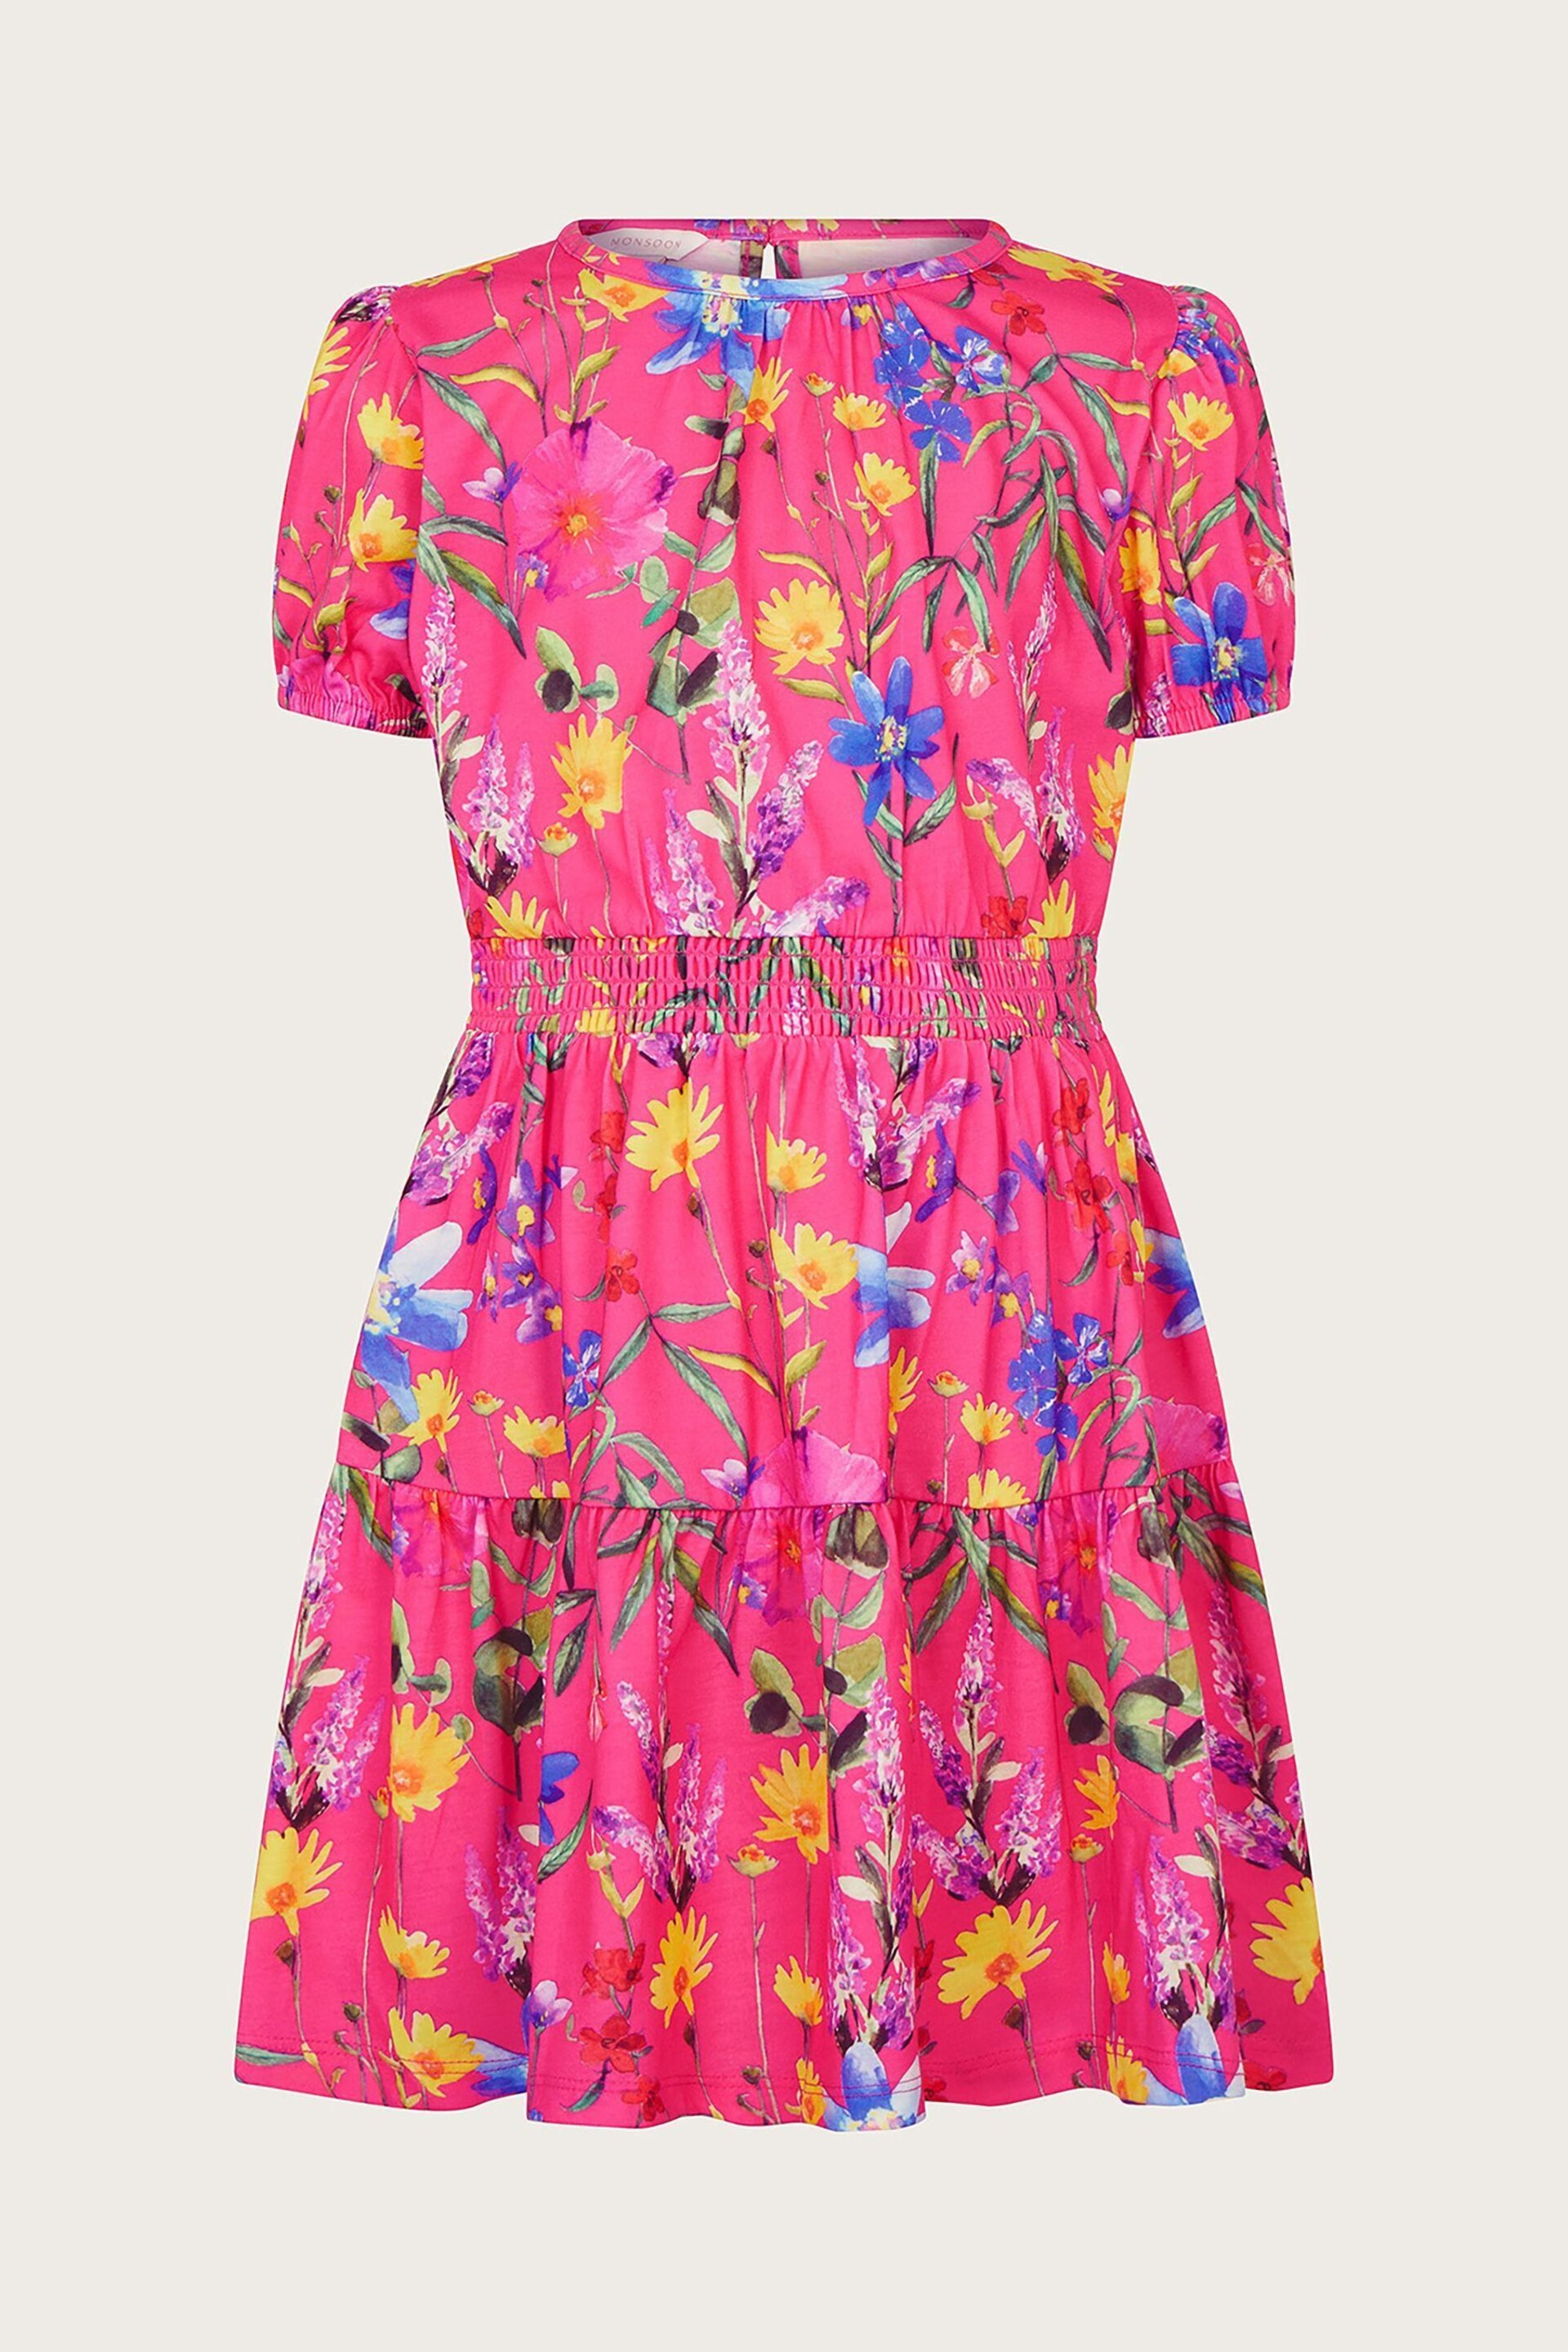 Monsoon Pink Botanical Jersey Dress - Image 1 of 1